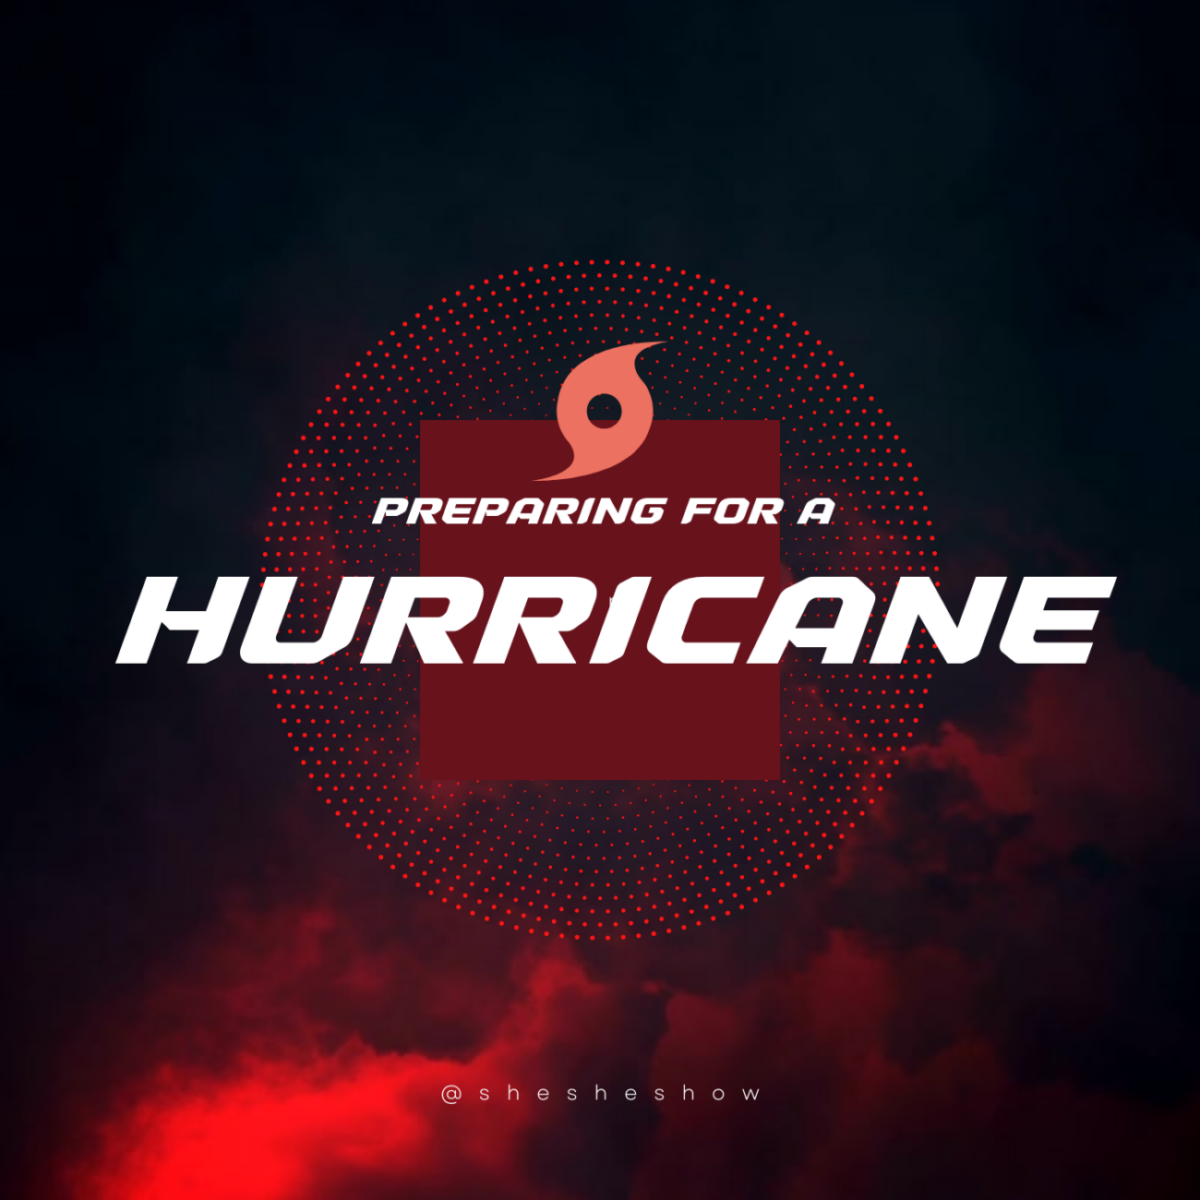 Preparing for a hurricane graphic